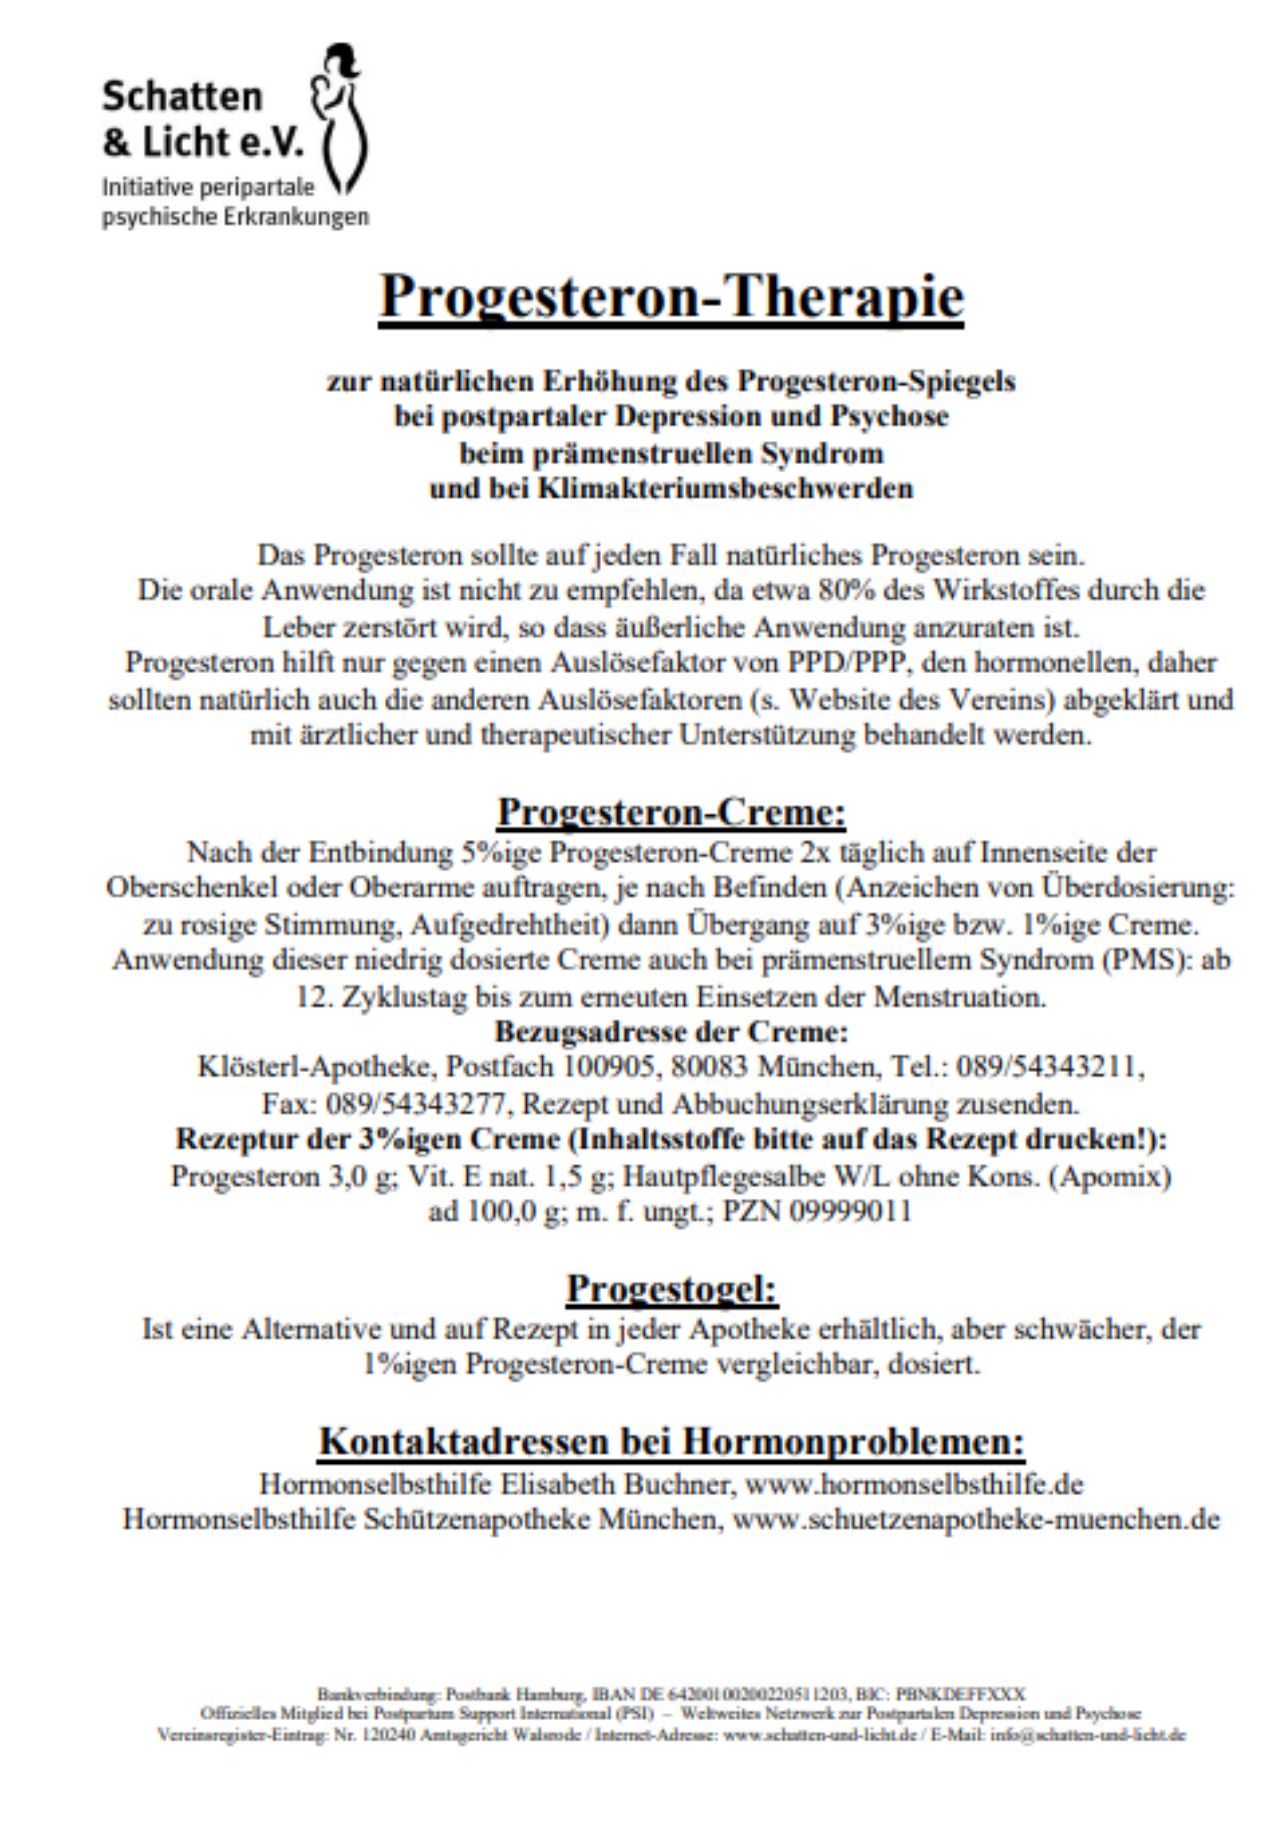 Progesteron-Prophylaxe